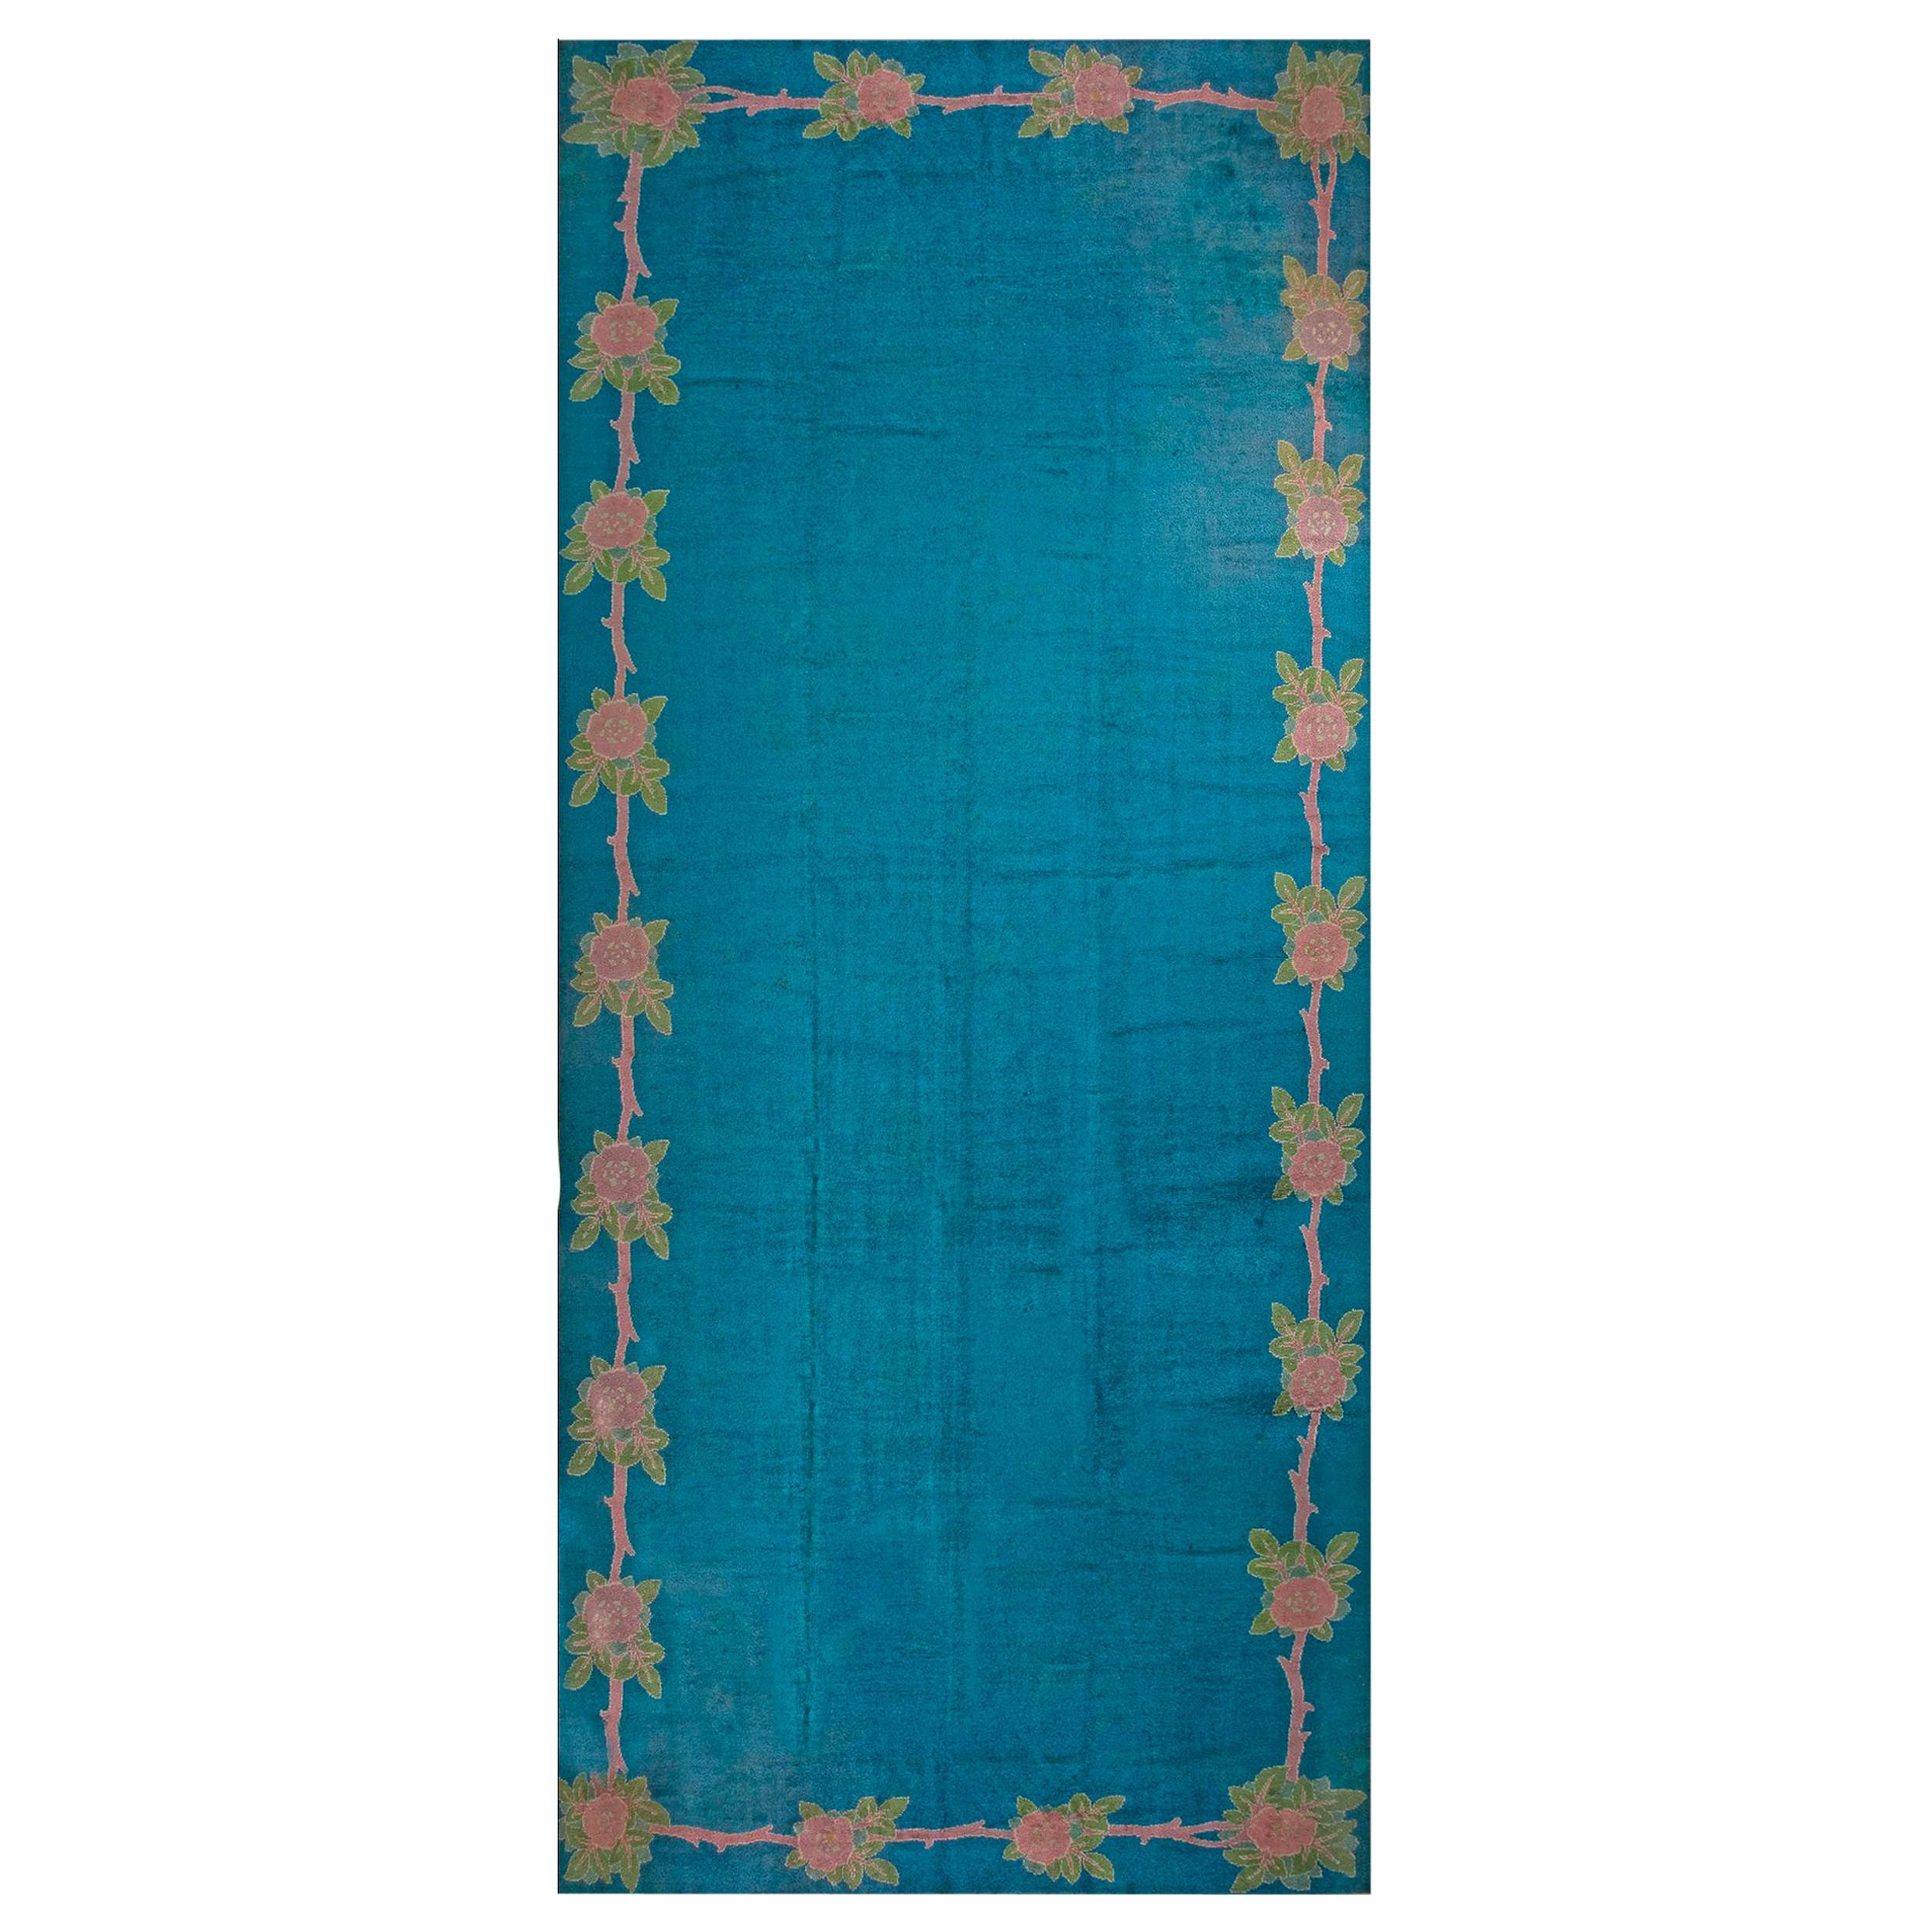 Early 20th Century Irish Donegal Arts & Crafts Carpet (12'6" x 25'2"-381 x 767)